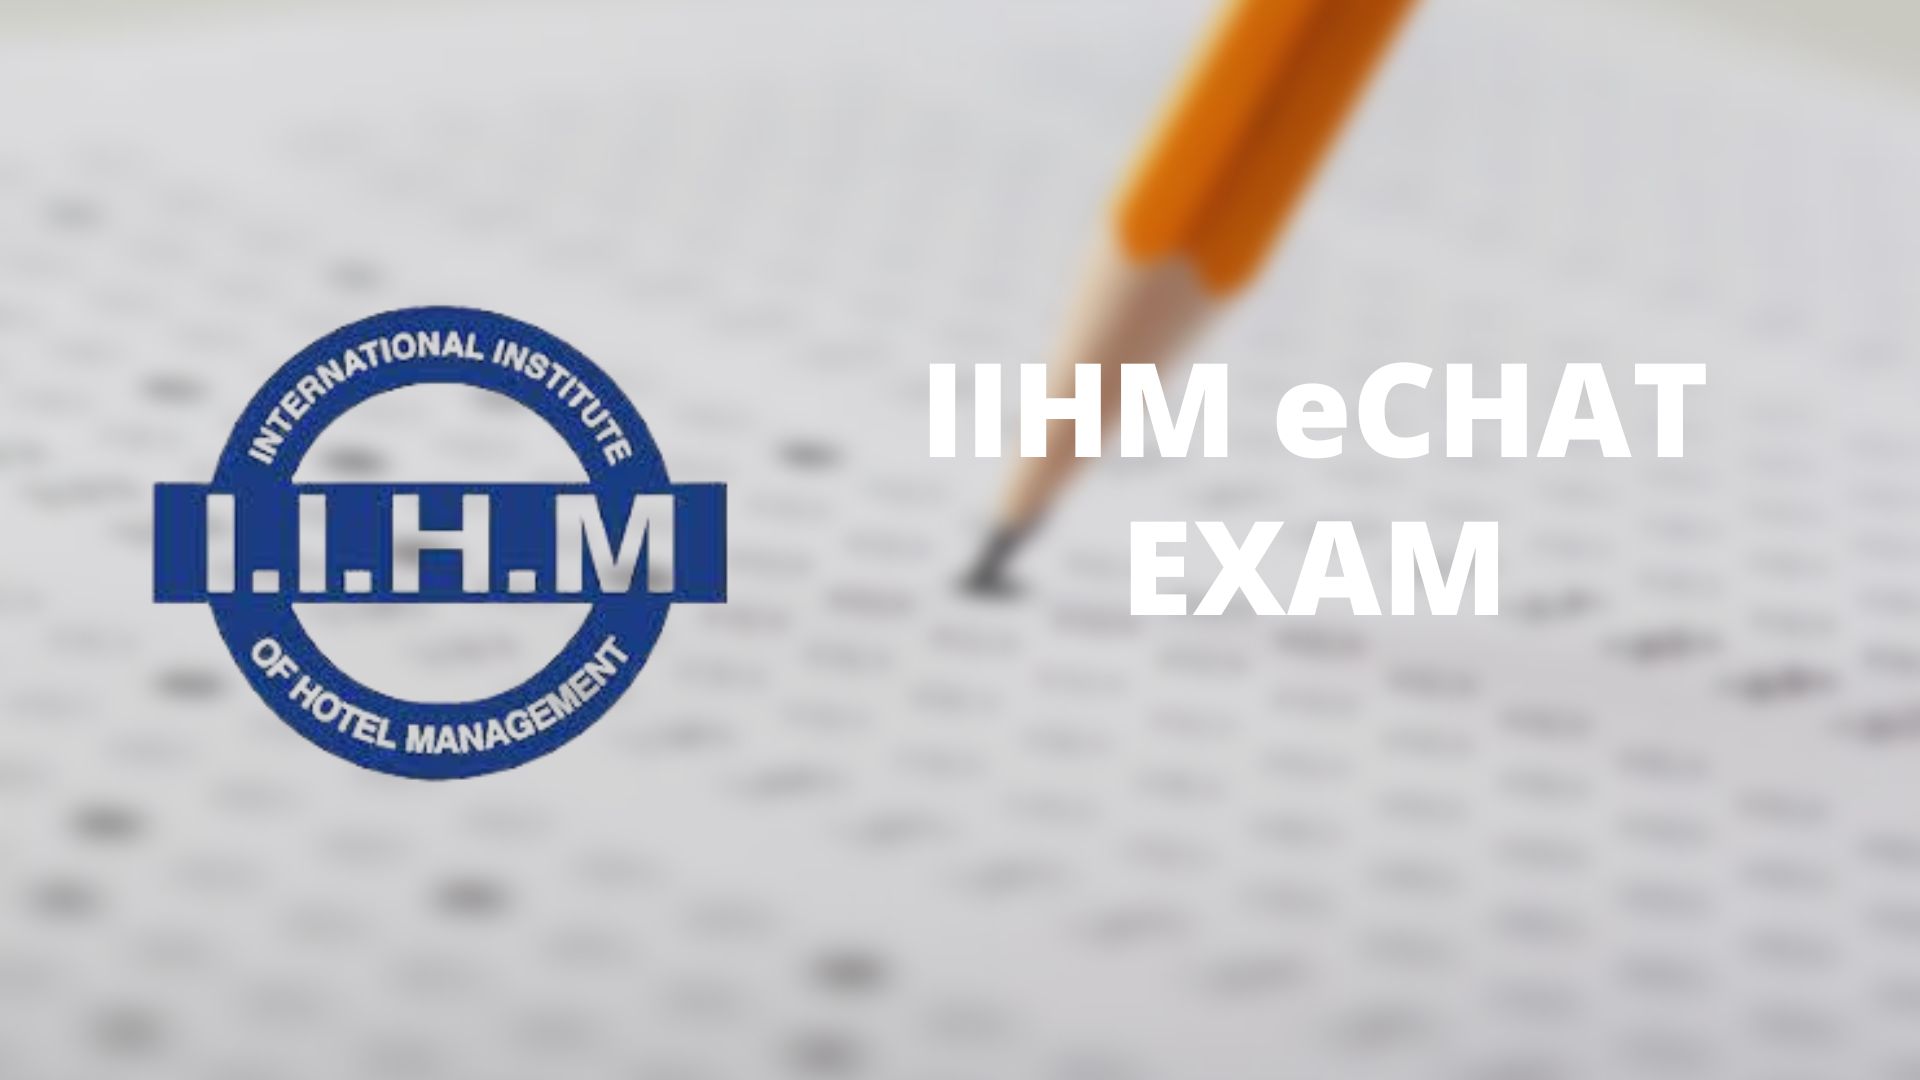 IIHM, International Institute of Hotel Management | Facebook